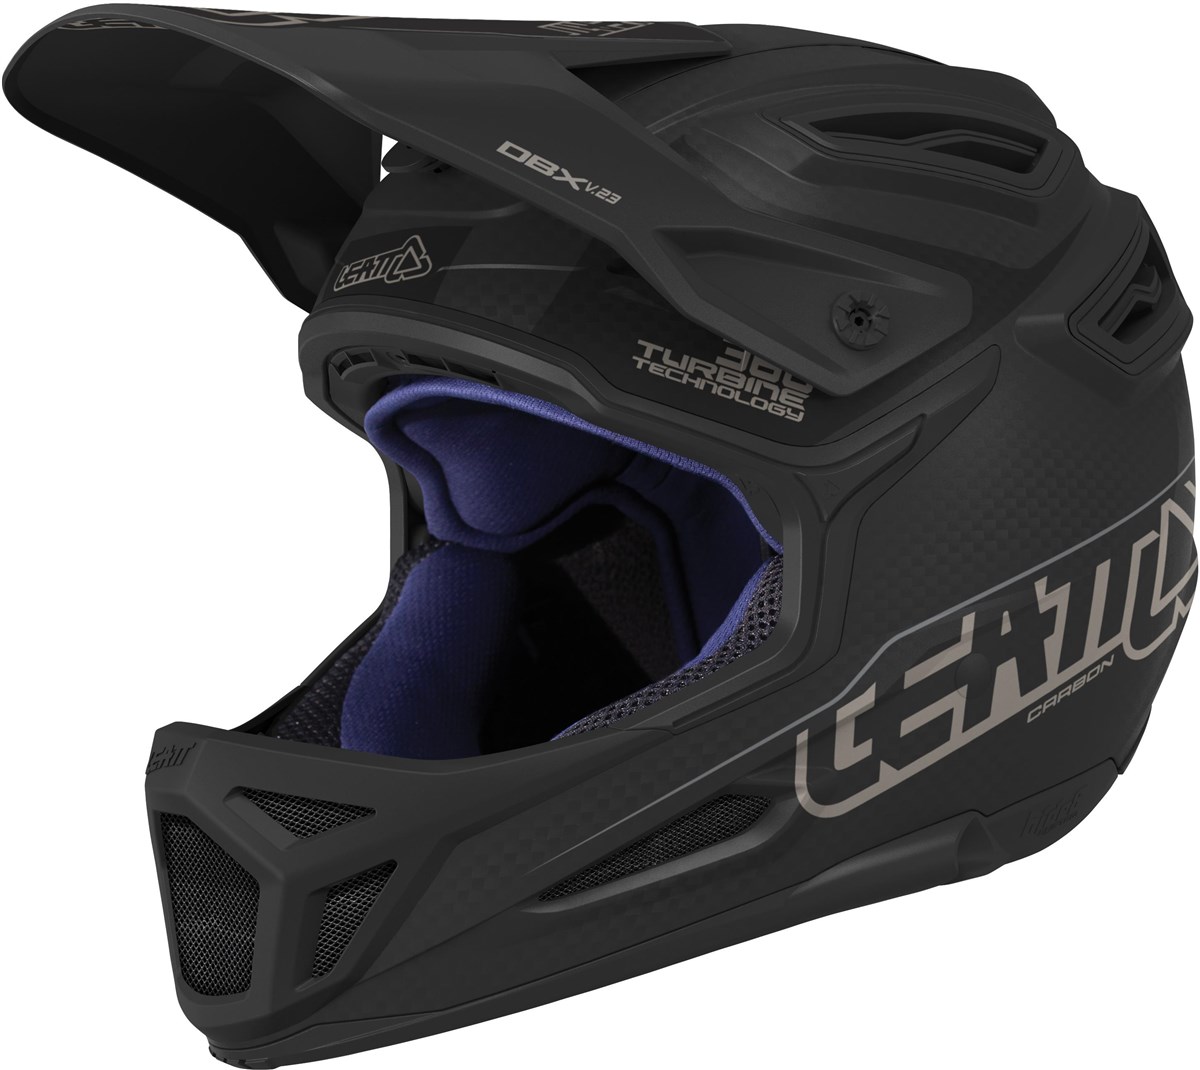 Leatt DBX 6.0 Carbon Full Face Helmet product image